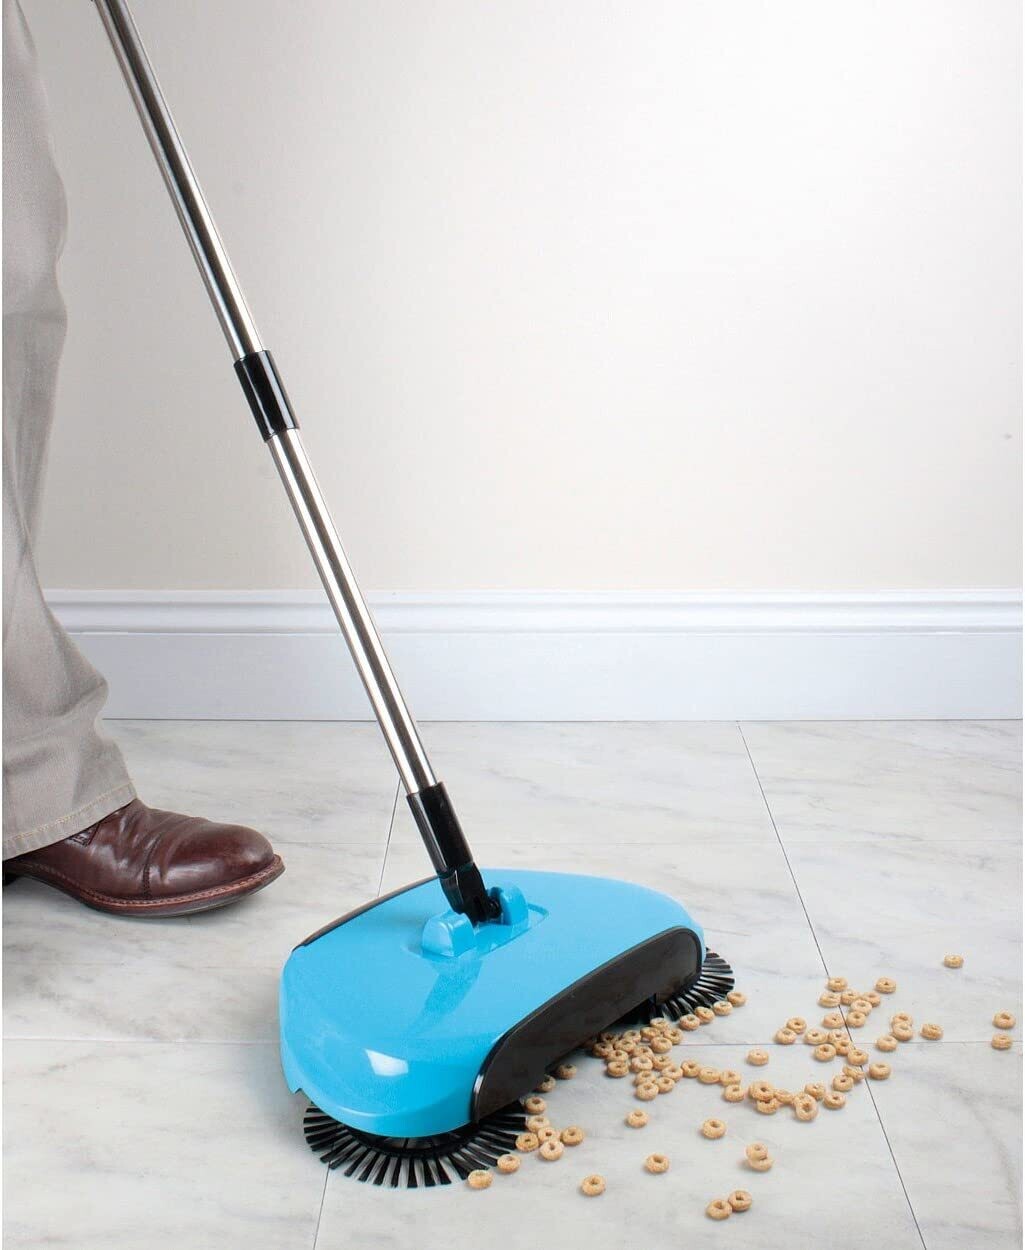 Generic Hard floor sweeper cleaner to clean under furniture. Long adjustable handle. BLUE